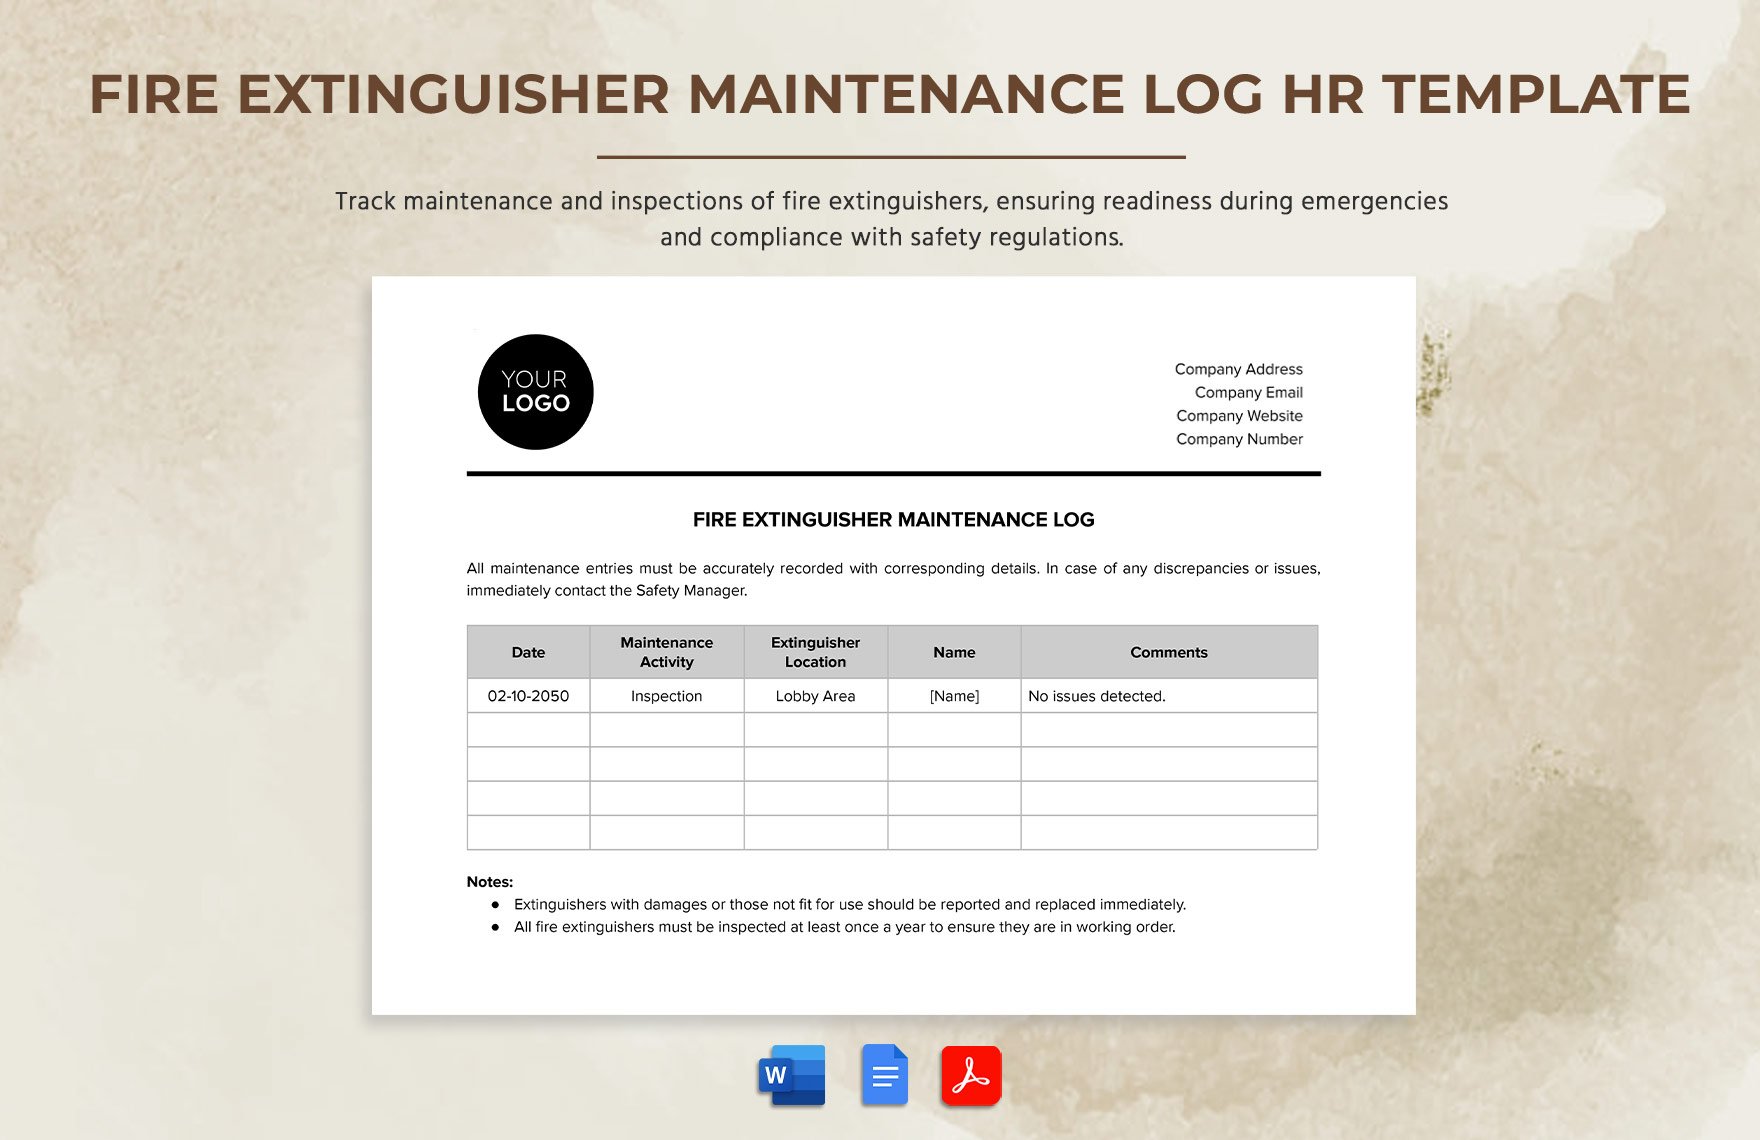 Fire Extinguisher Maintenance Log HR Template in Word, Google Docs, PDF